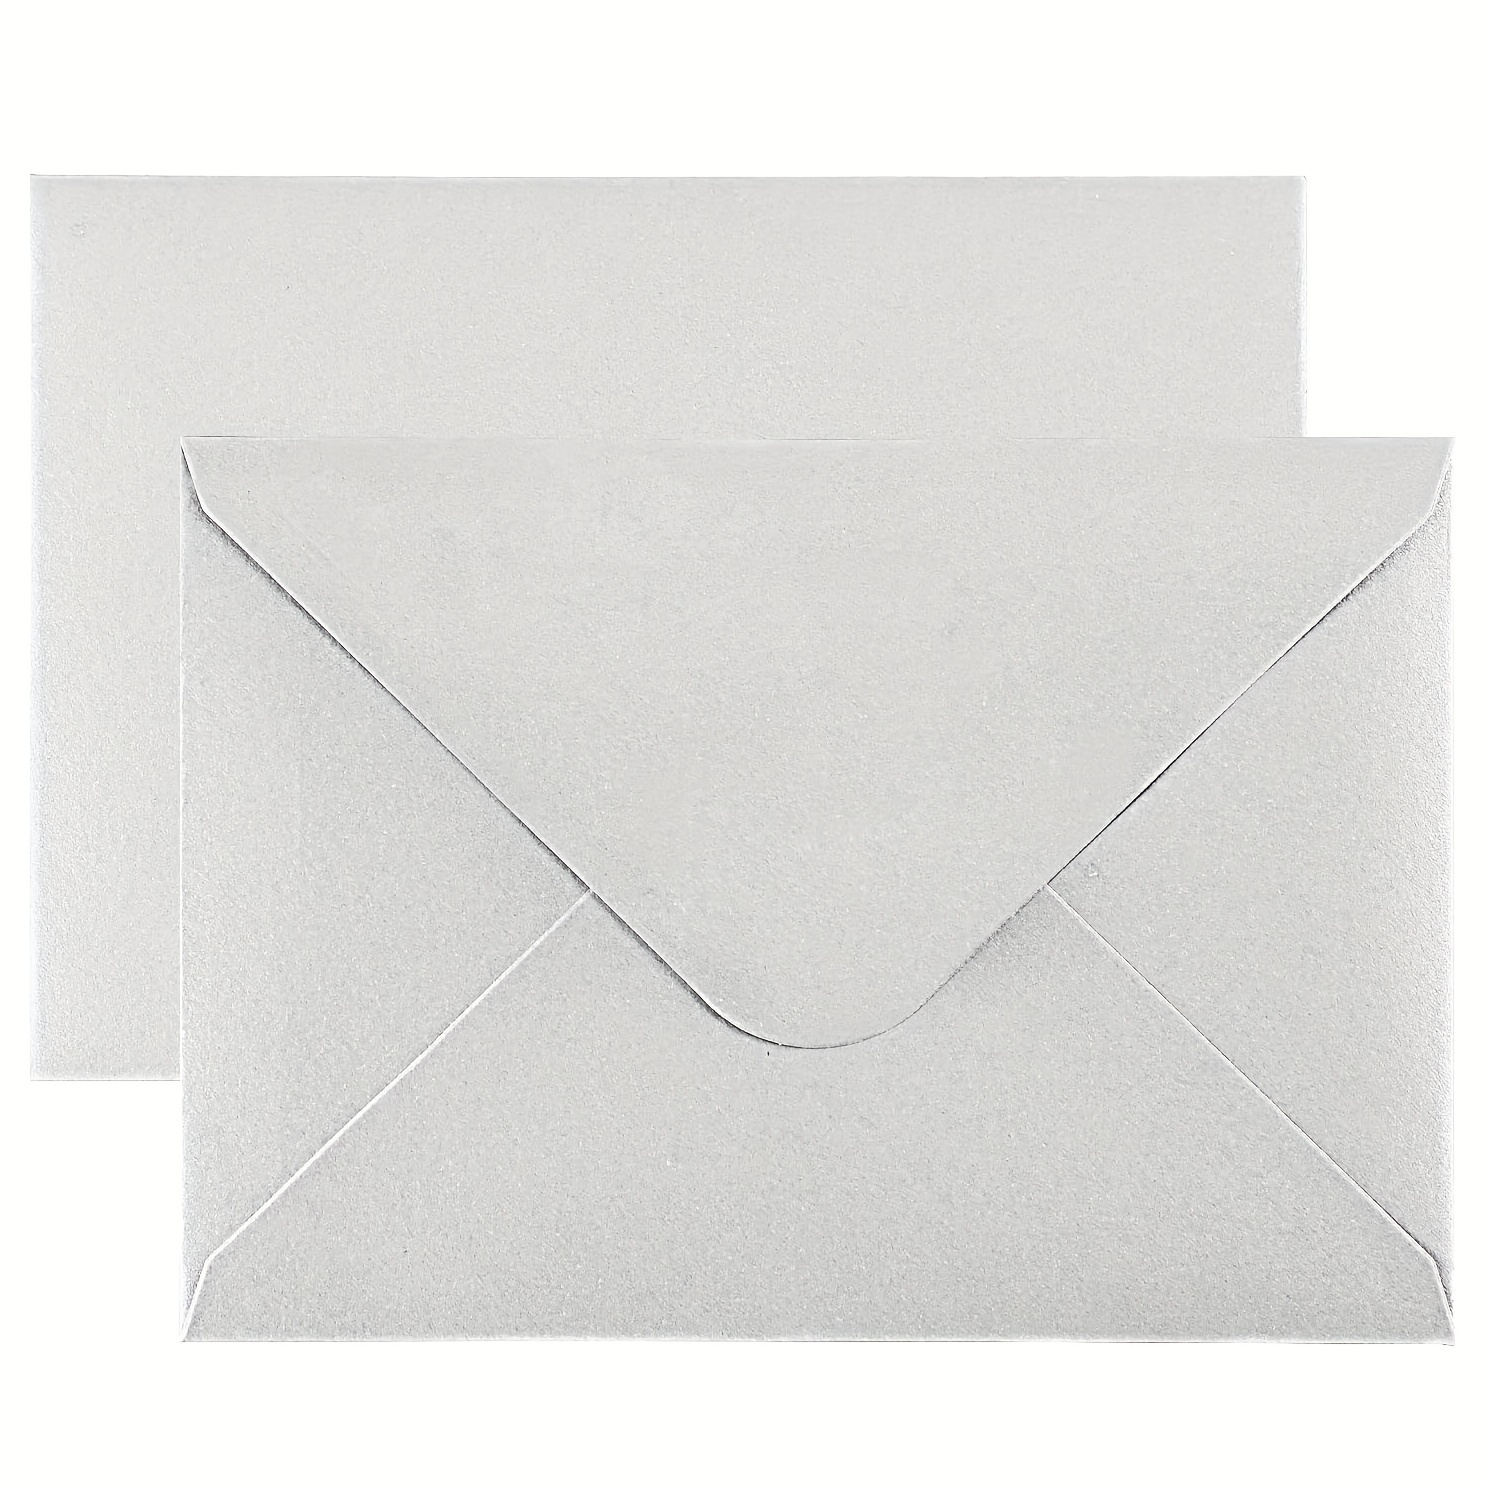  100 Pcs 5x7 Metallic Invitation Envelopes for 5 x 7